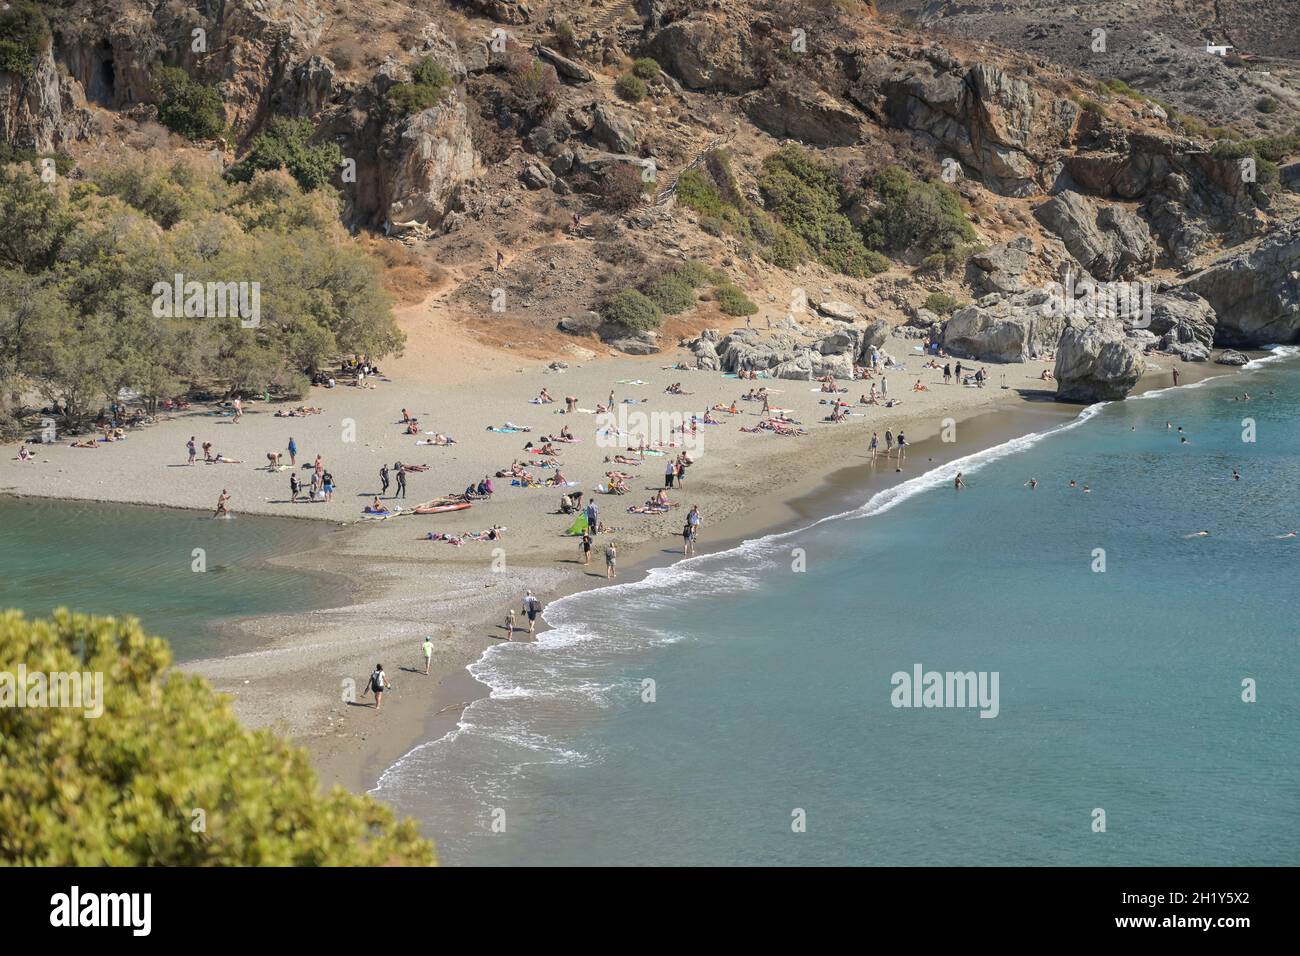 Sandstrand, Sonnenbaden, Urlauber, Touristen, Preveli, Kreta, Griechenland Stock Photo